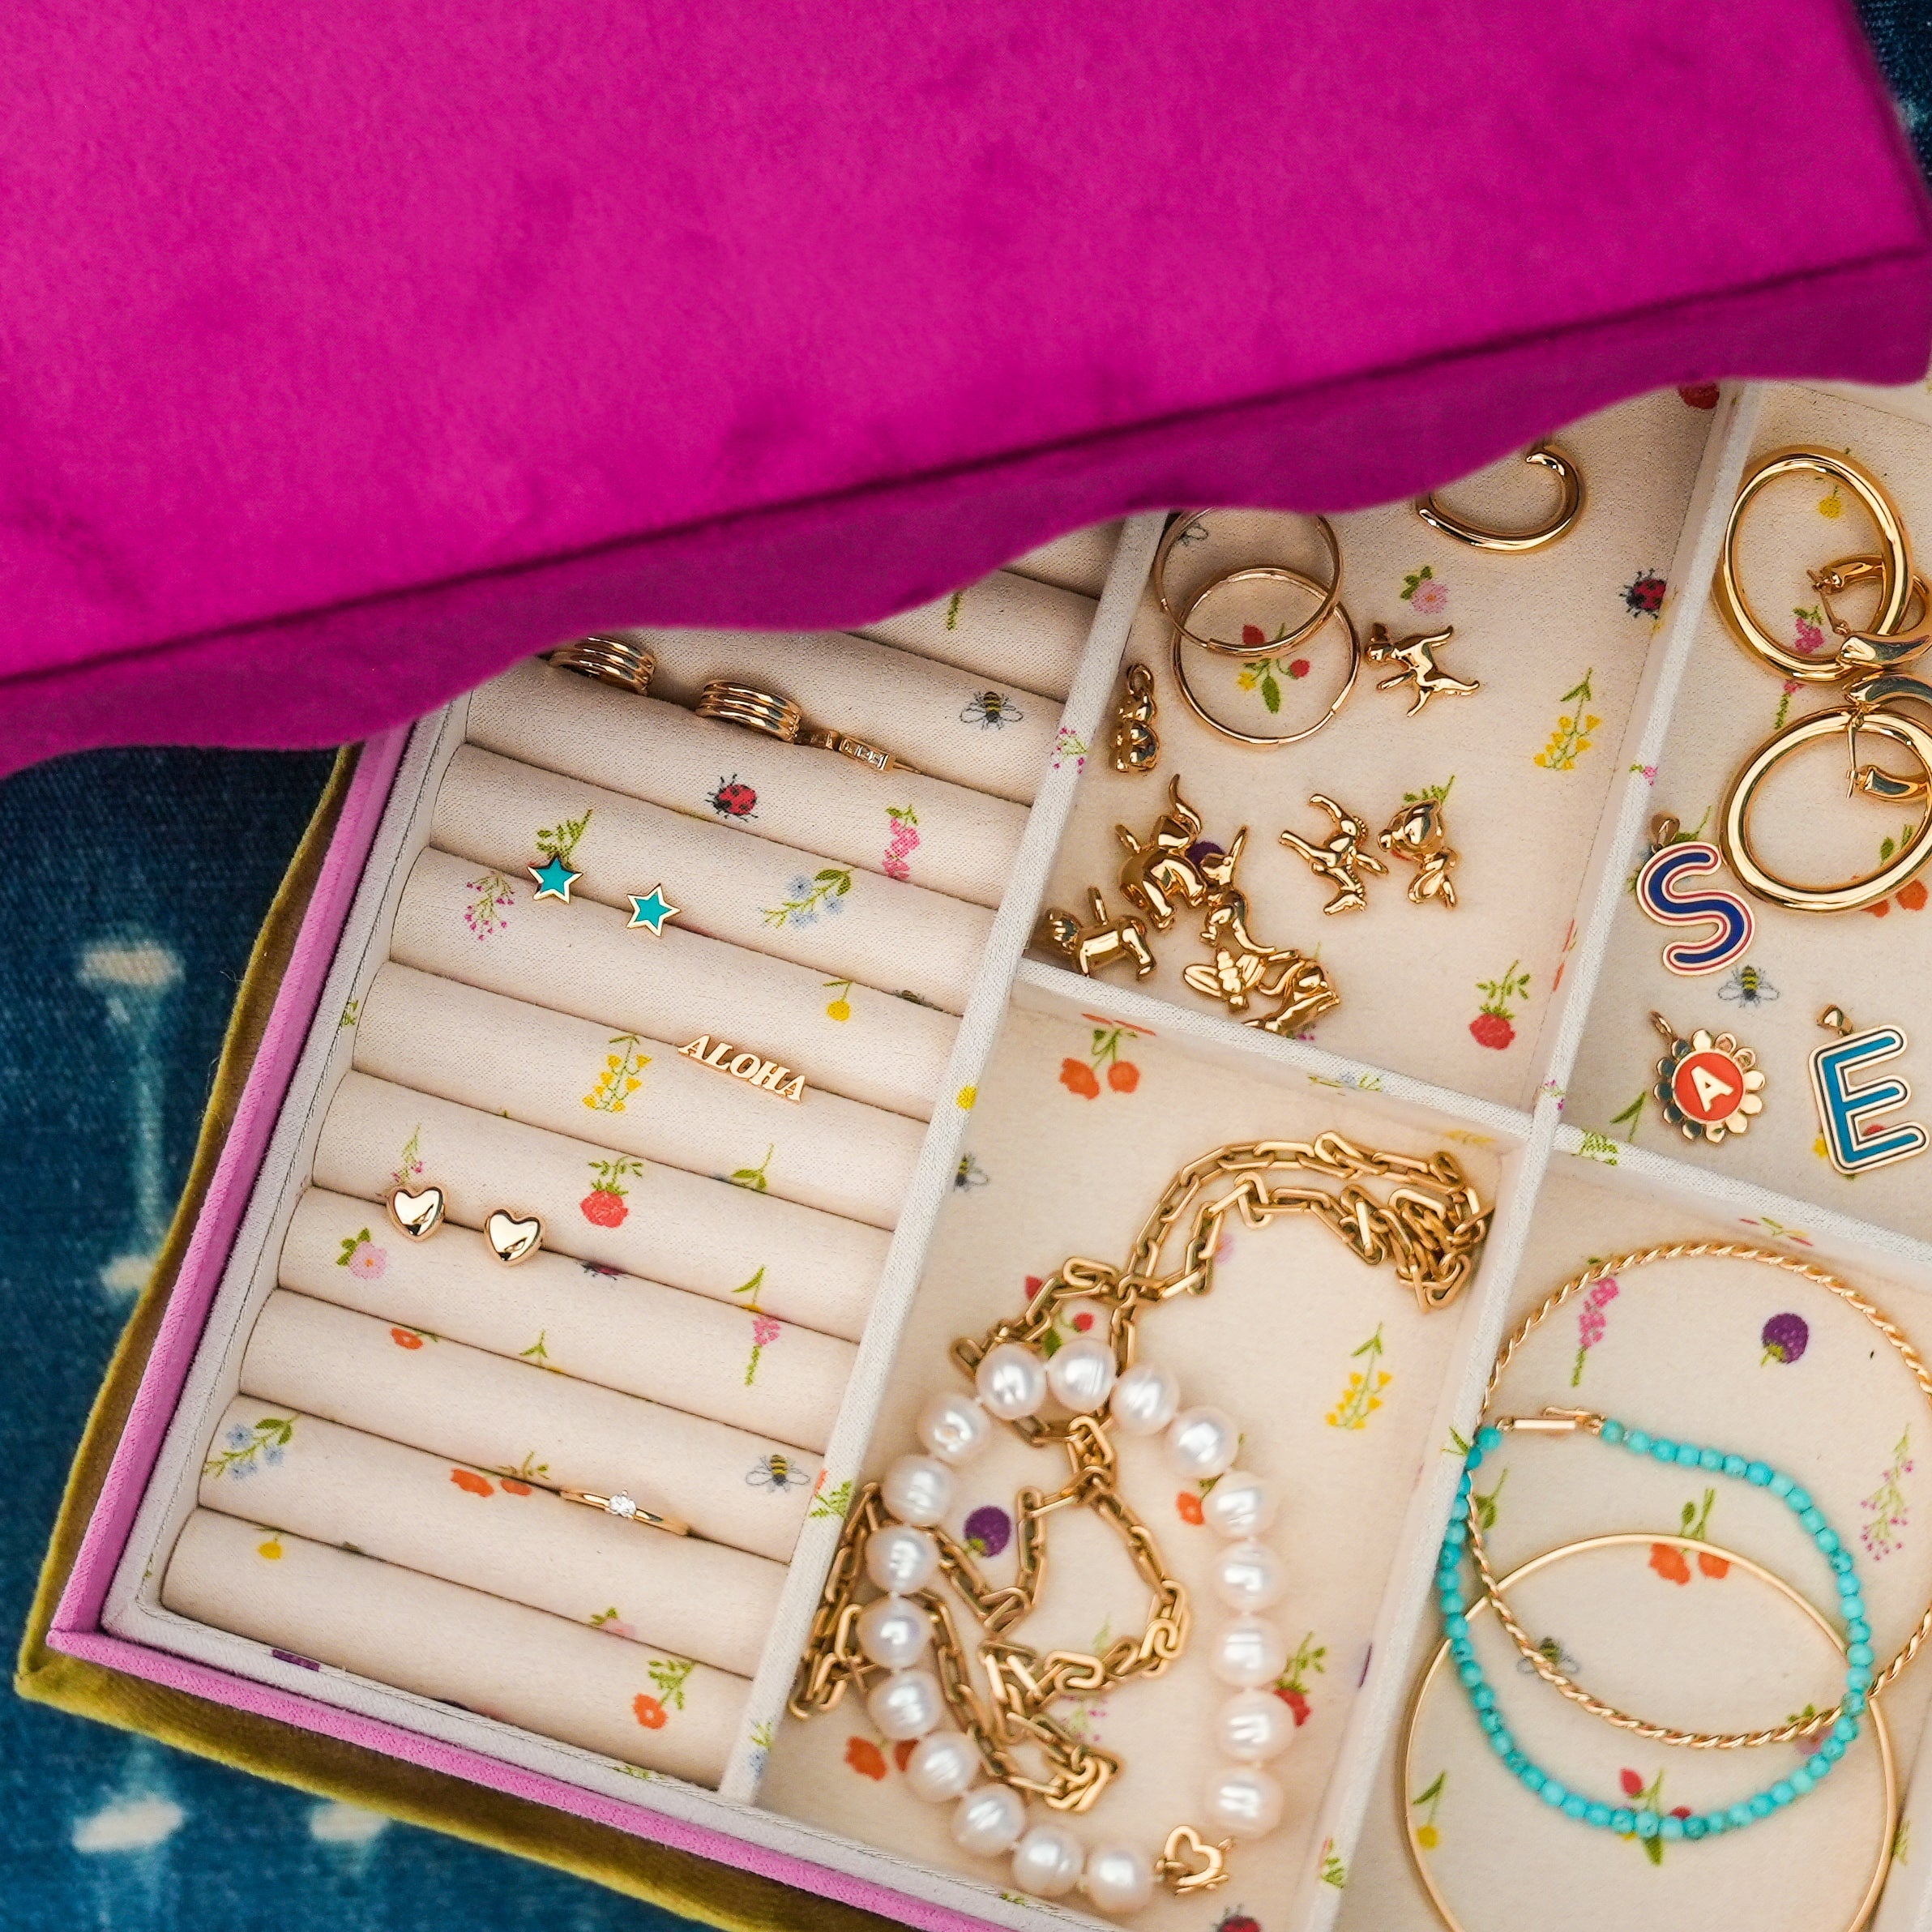 Scalloped Floret Jewelry Box